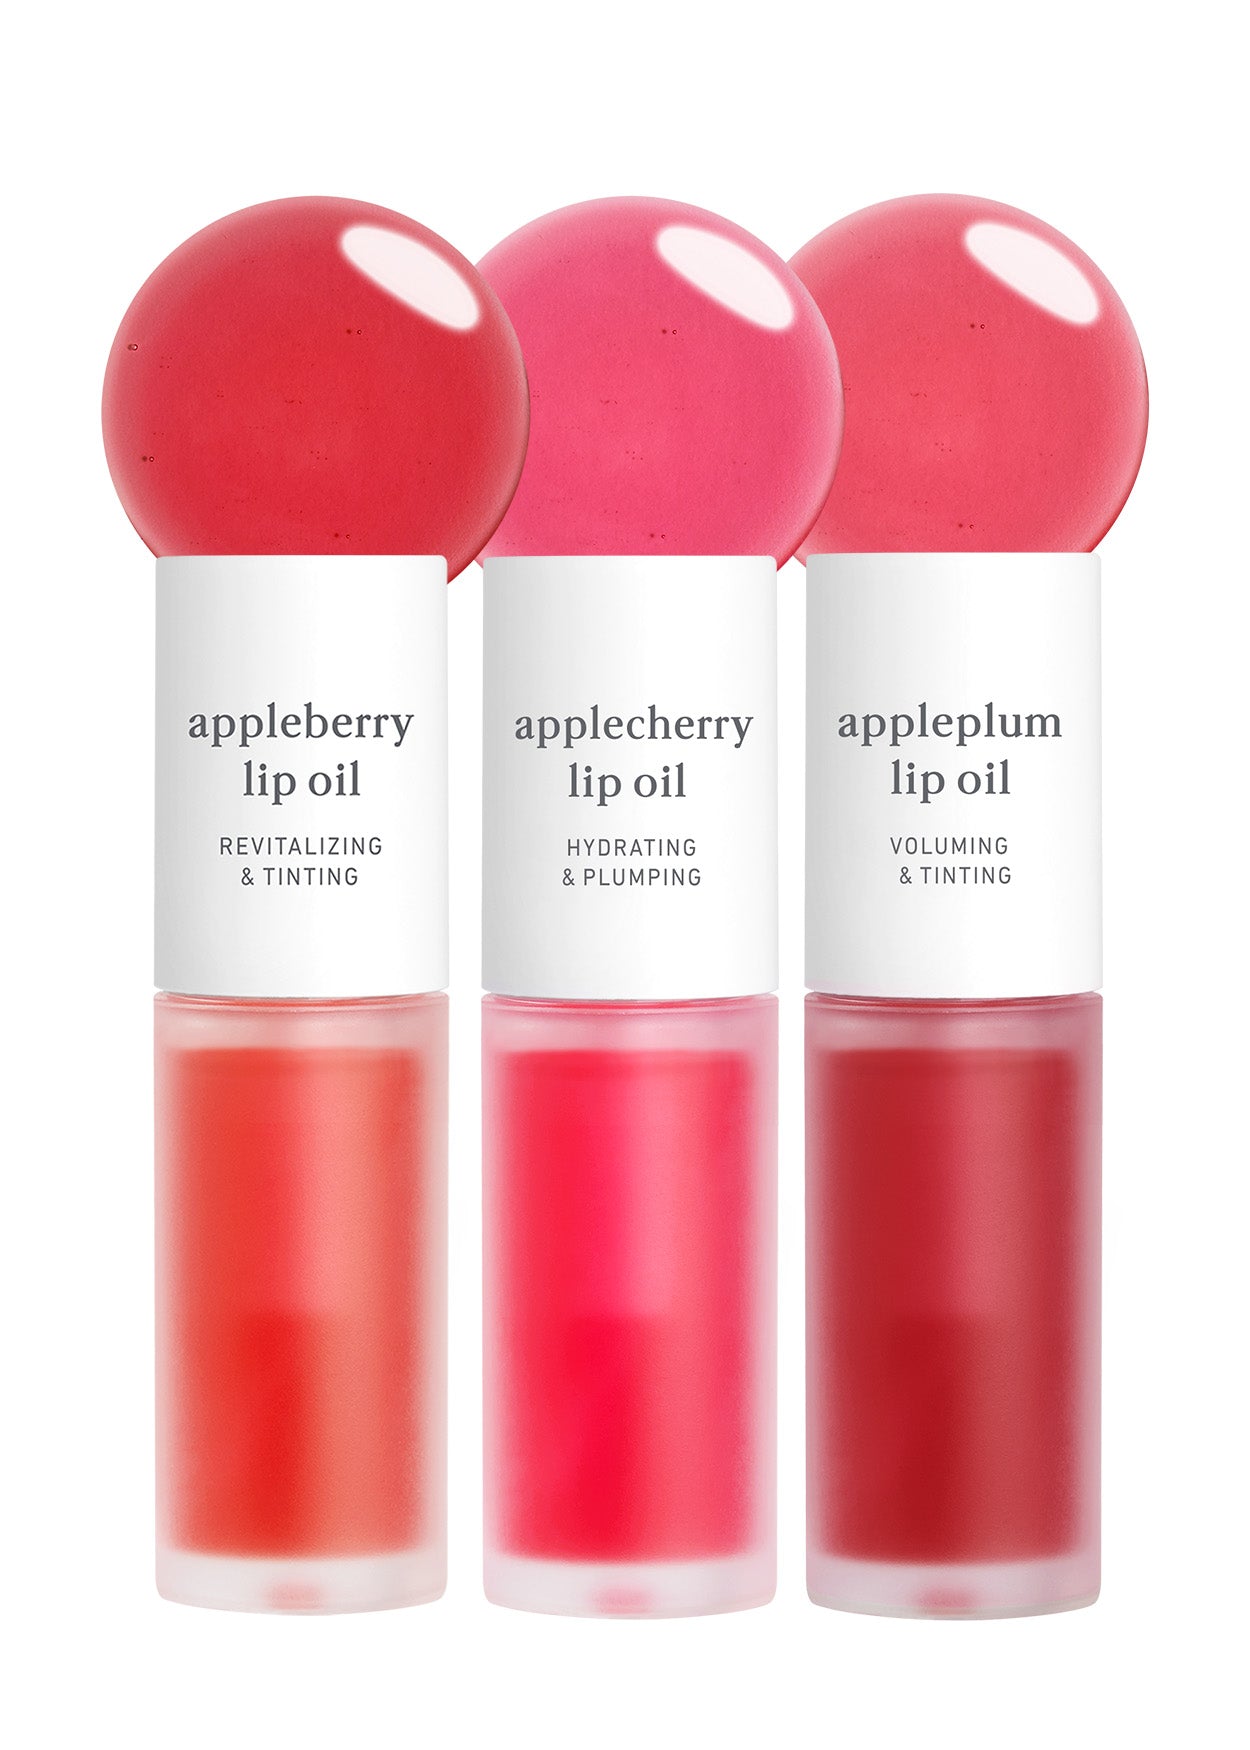 appleseed lip oil trio (appleberry & applecherry & appleplum)